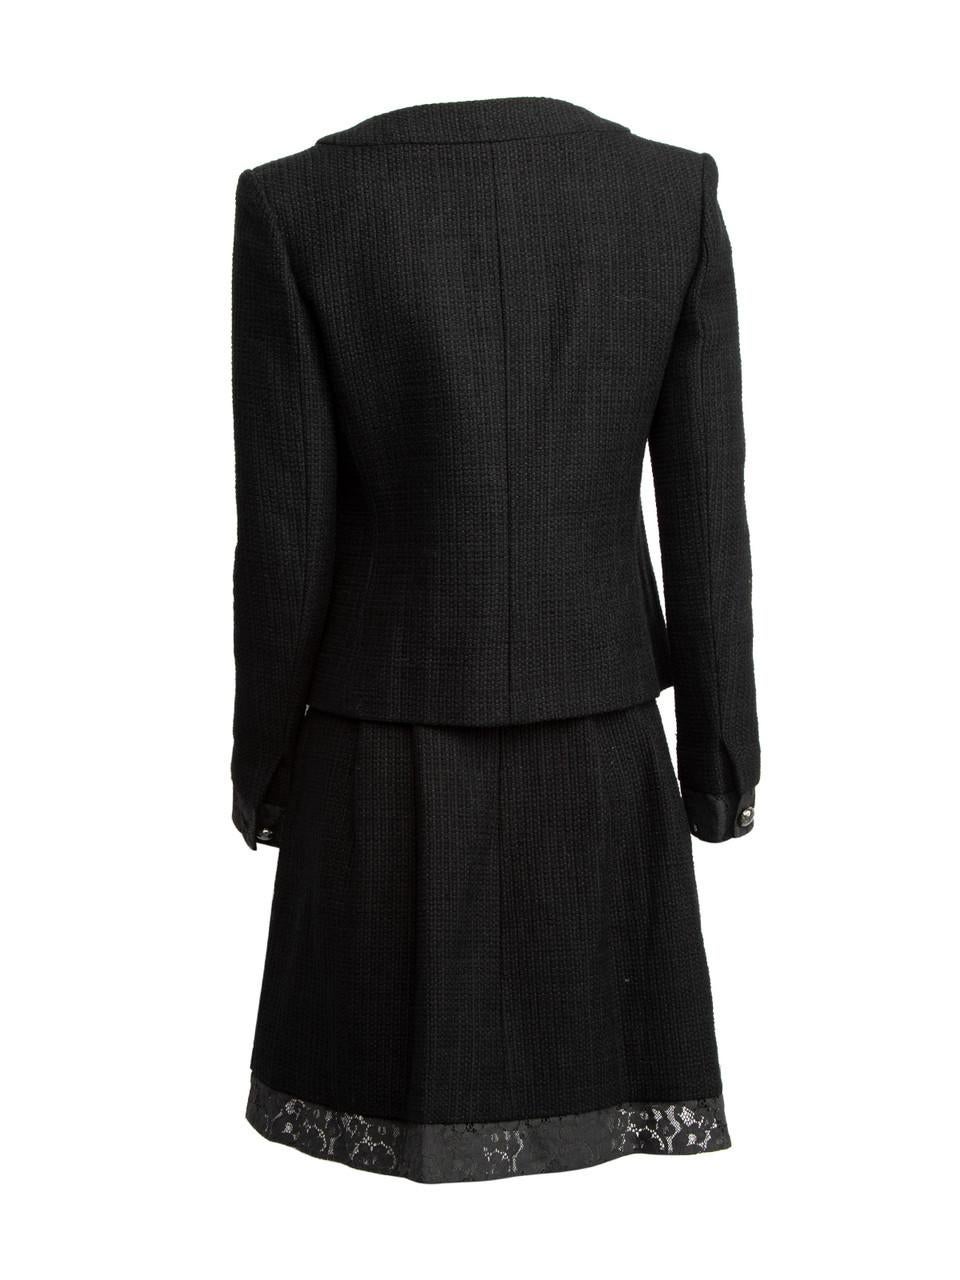 Chanel Women's Vintage Black Chanel Two Piece Suit For Sale 2